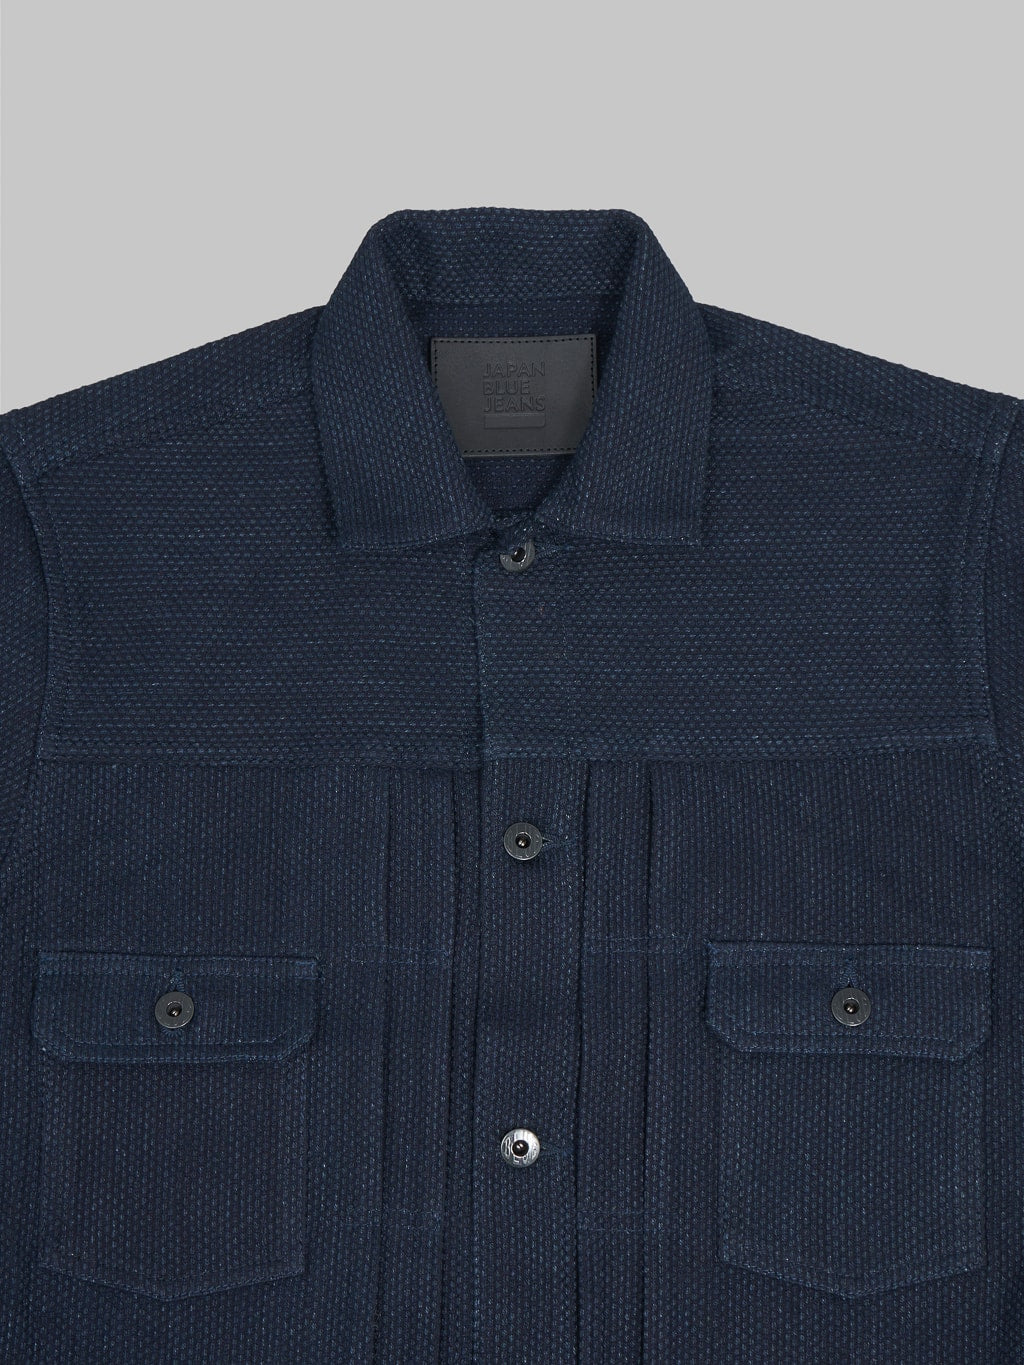 Japan Blue Indigo Sashiko type II jacket  collar